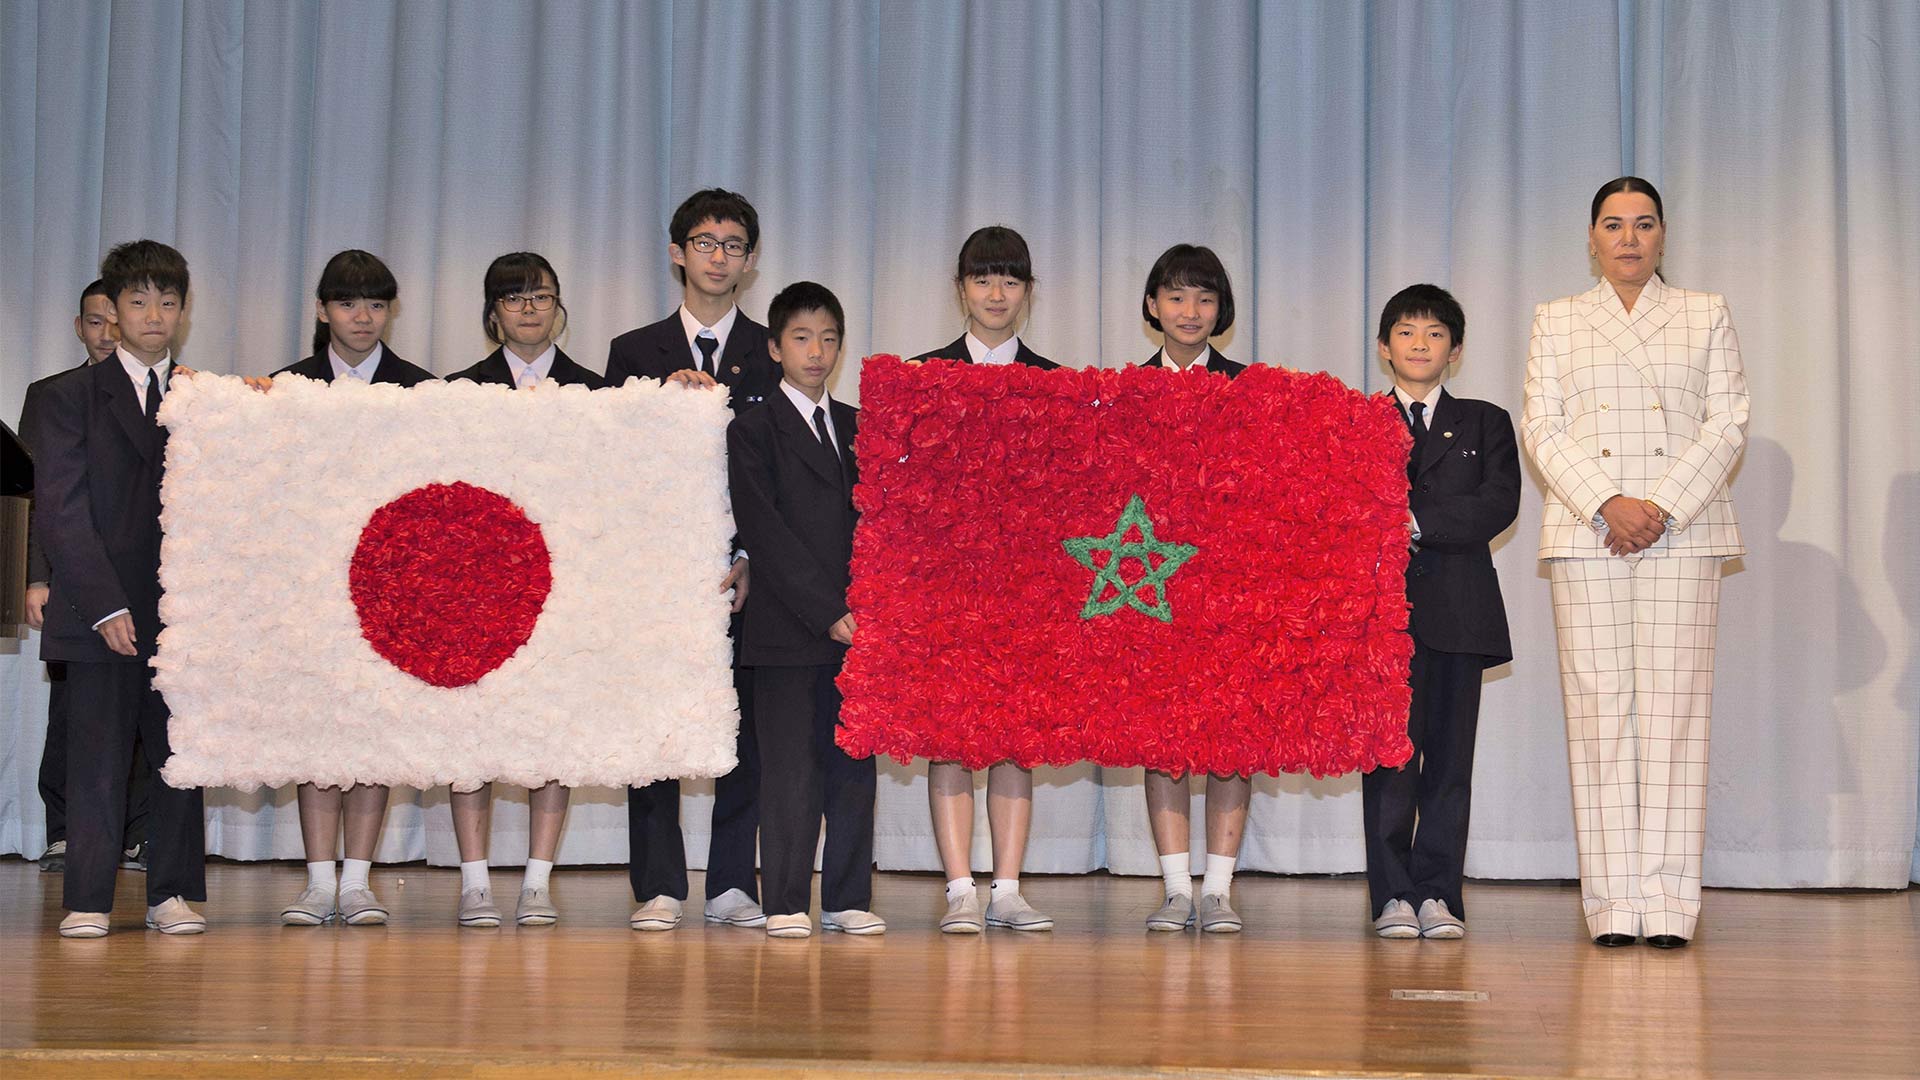 <strong>SAR la Princesse Lalla Hasnaa</strong> visite une école de Tokyo